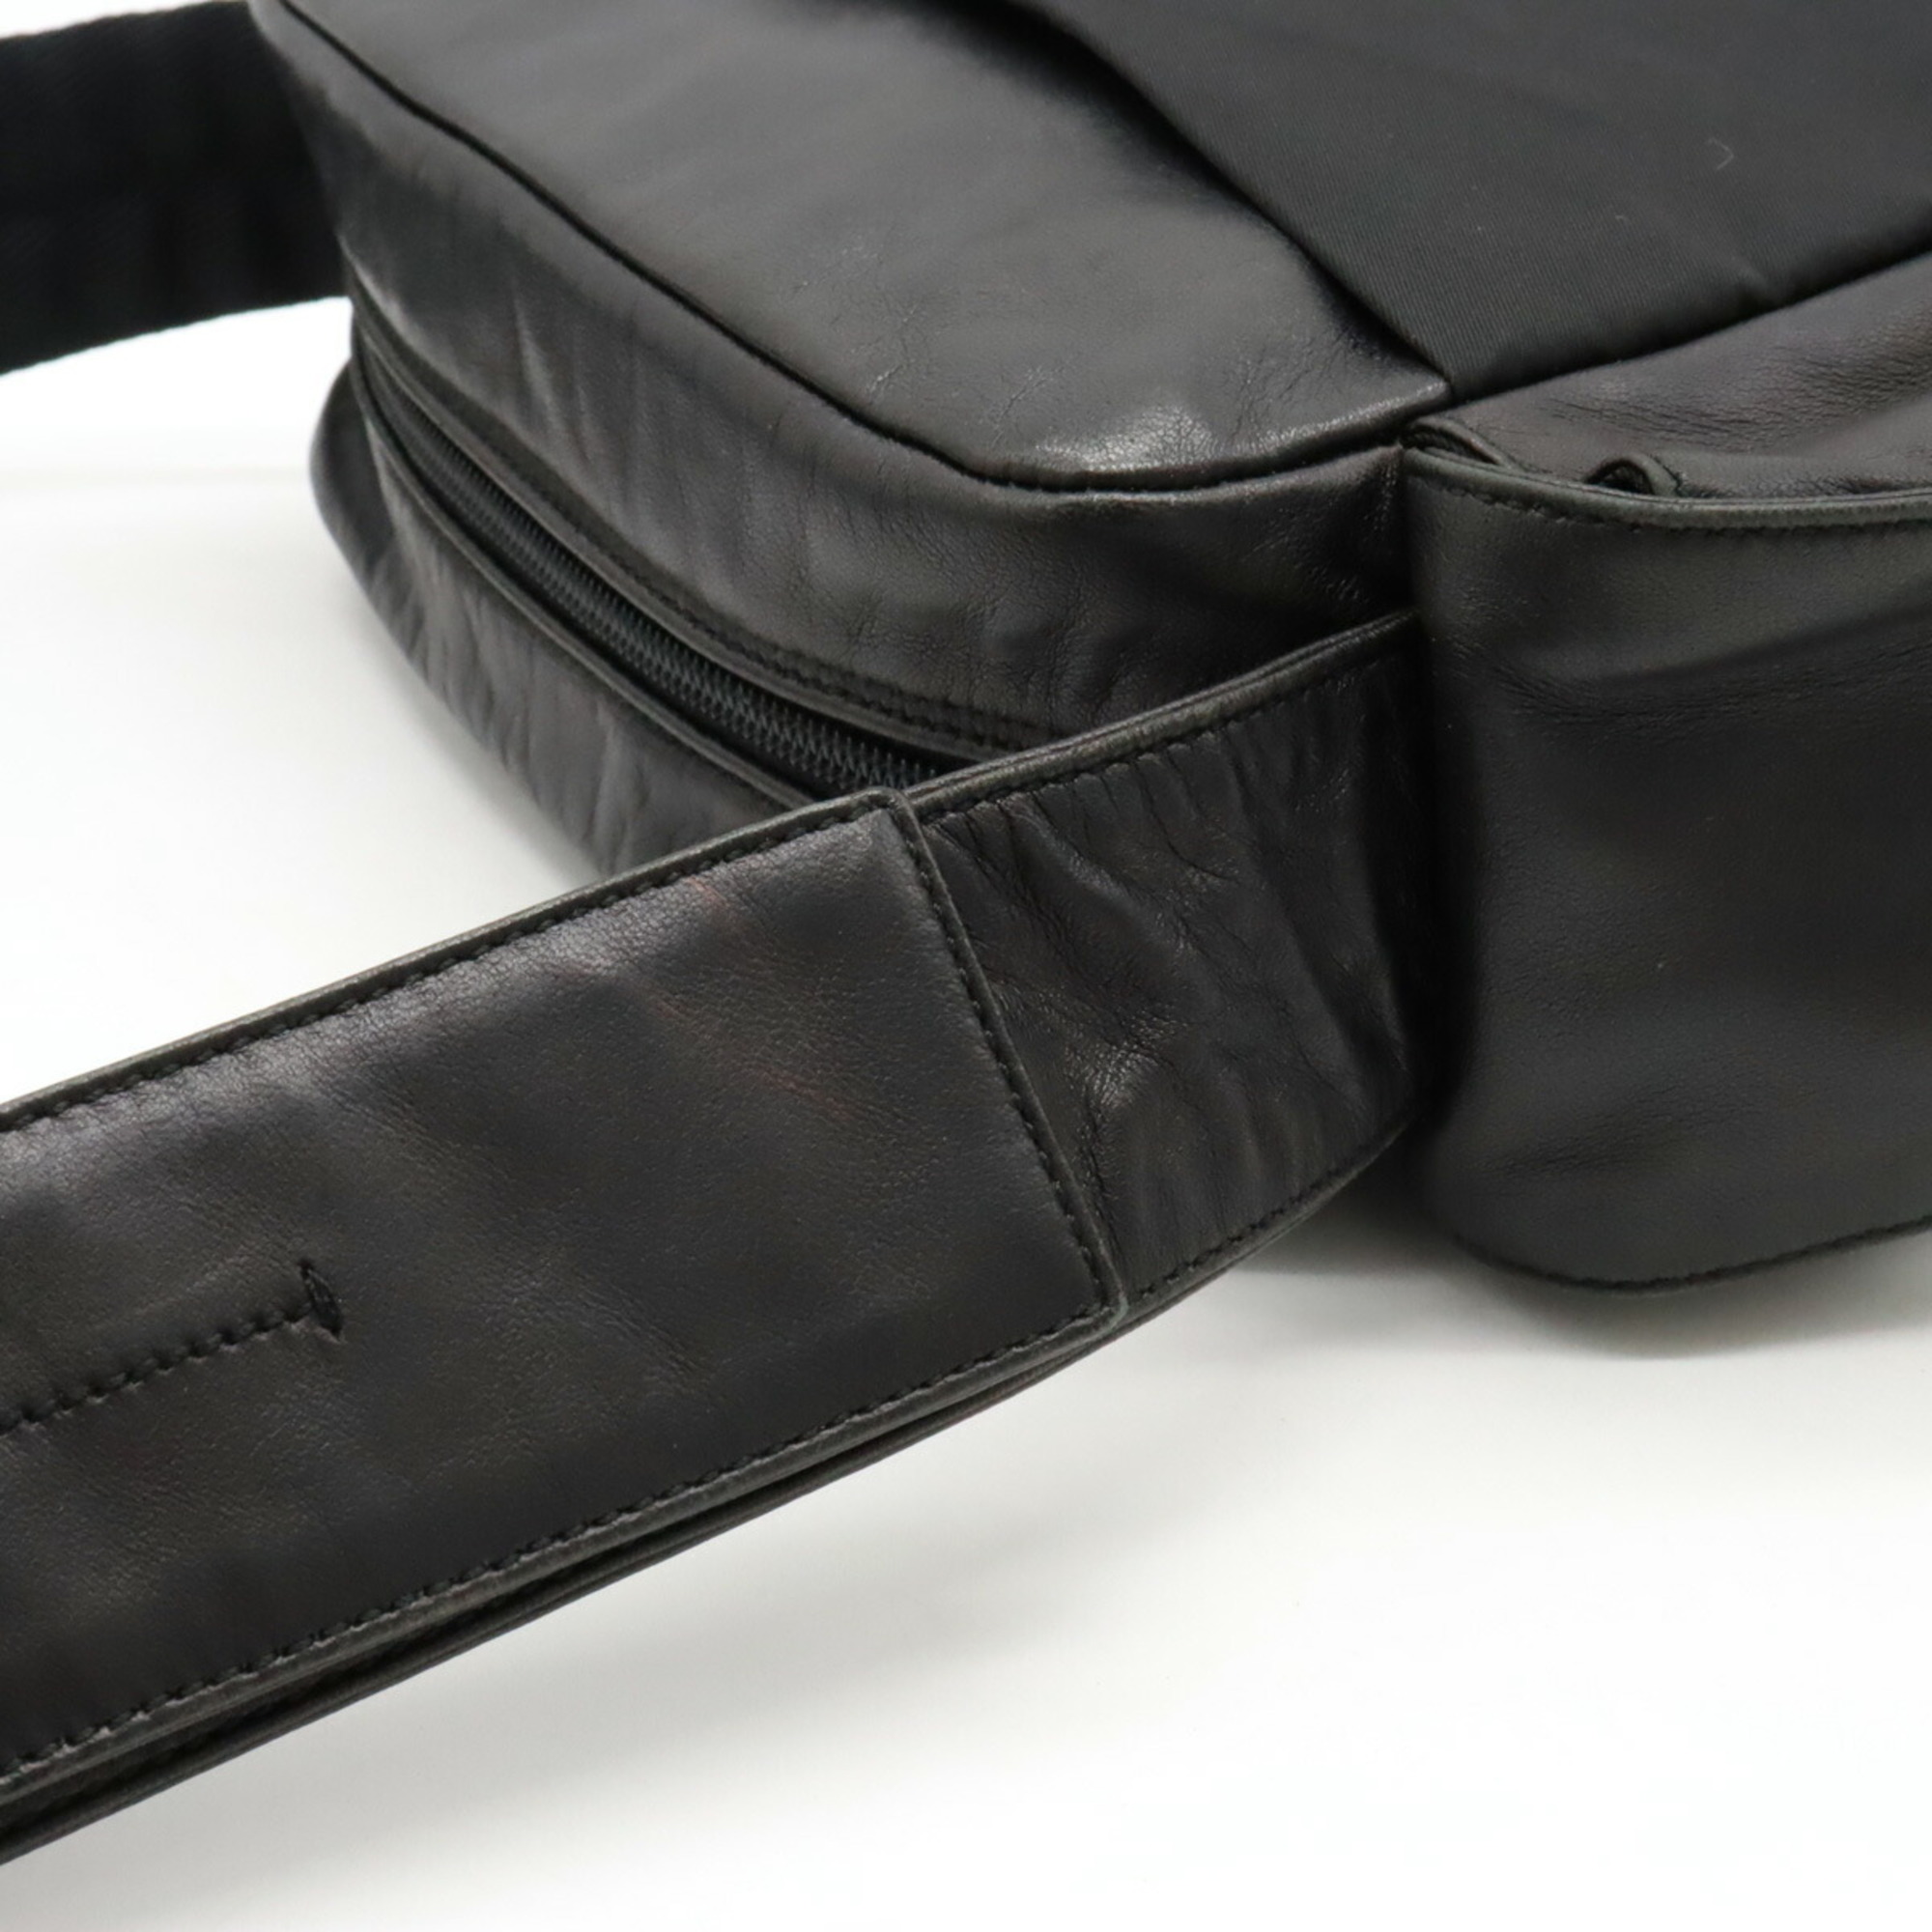 PRADA Prada Shoulder Bag Pochette Nylon Nappa Leather NERO Black